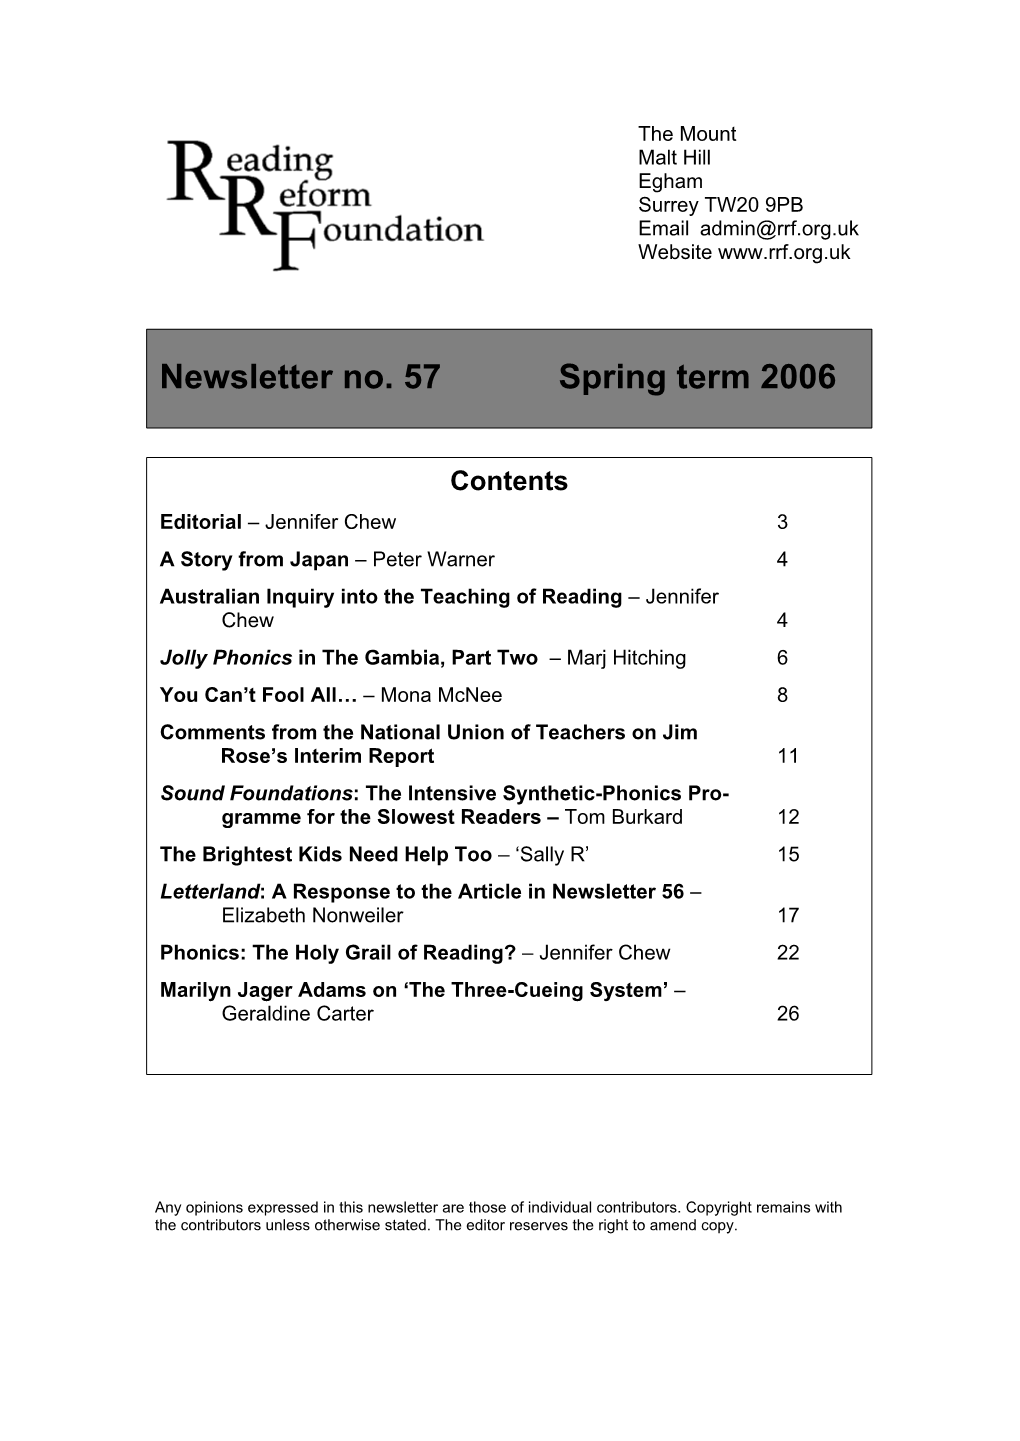 Newsletter No. 57 Spring Term 2006